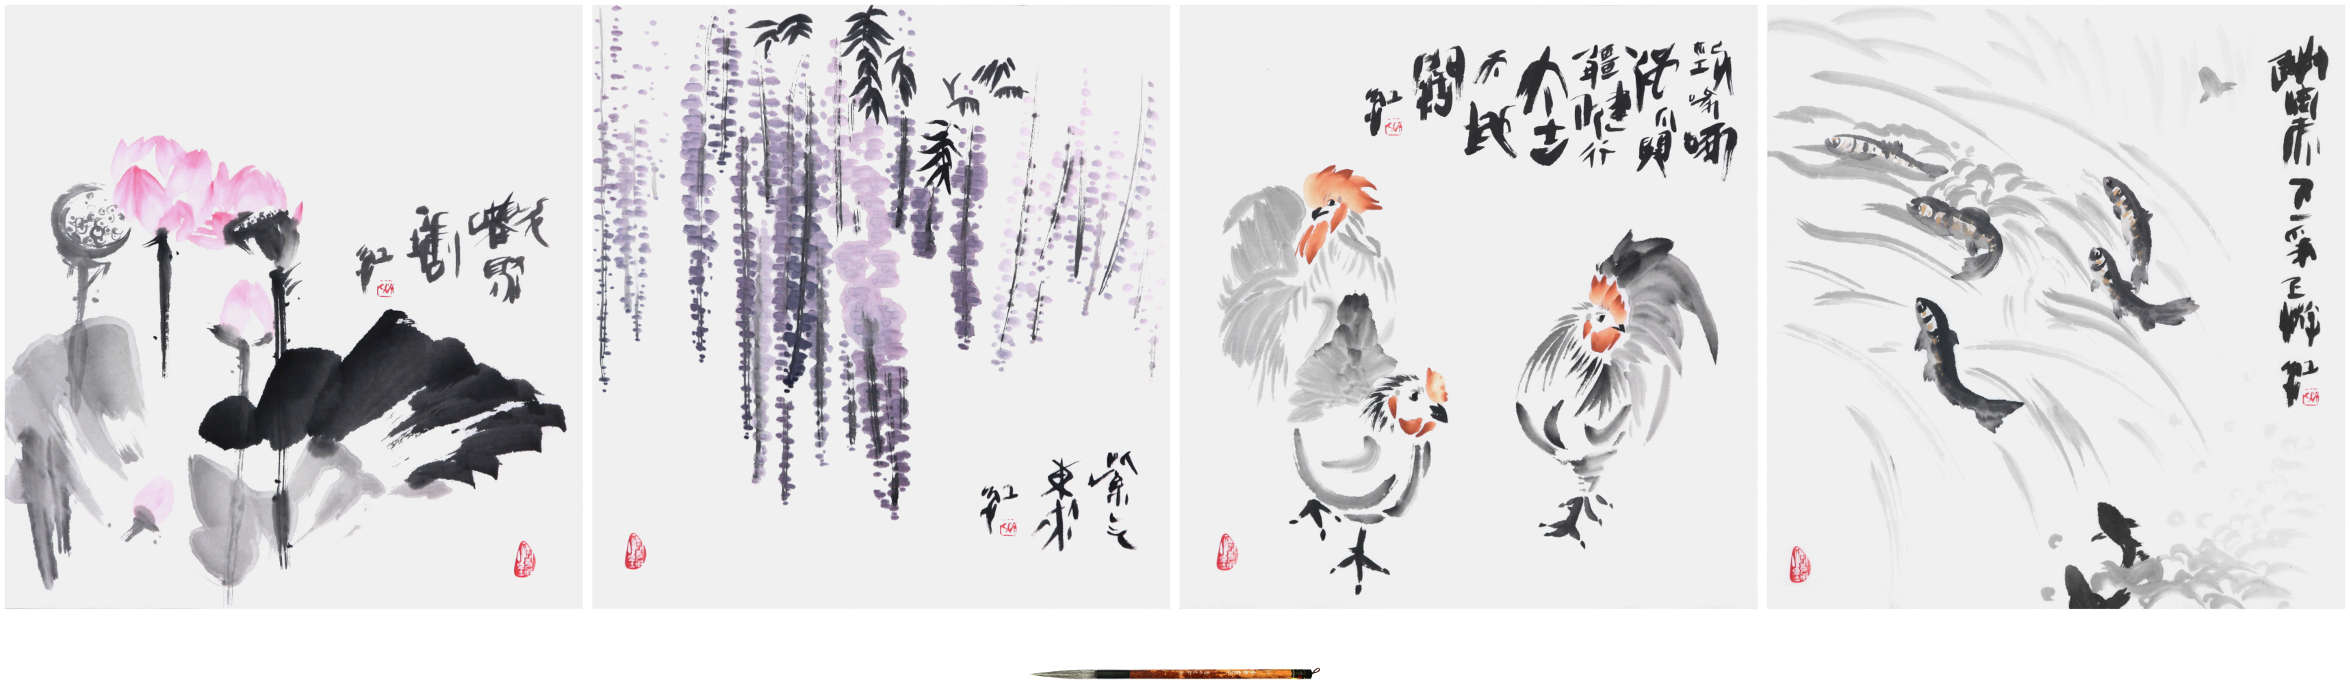 Sai Koh (Qi Hong)’s Freehand Brushwork Chinese Paintings: bird-and-flower painting, literati painting, ink wash painting 2